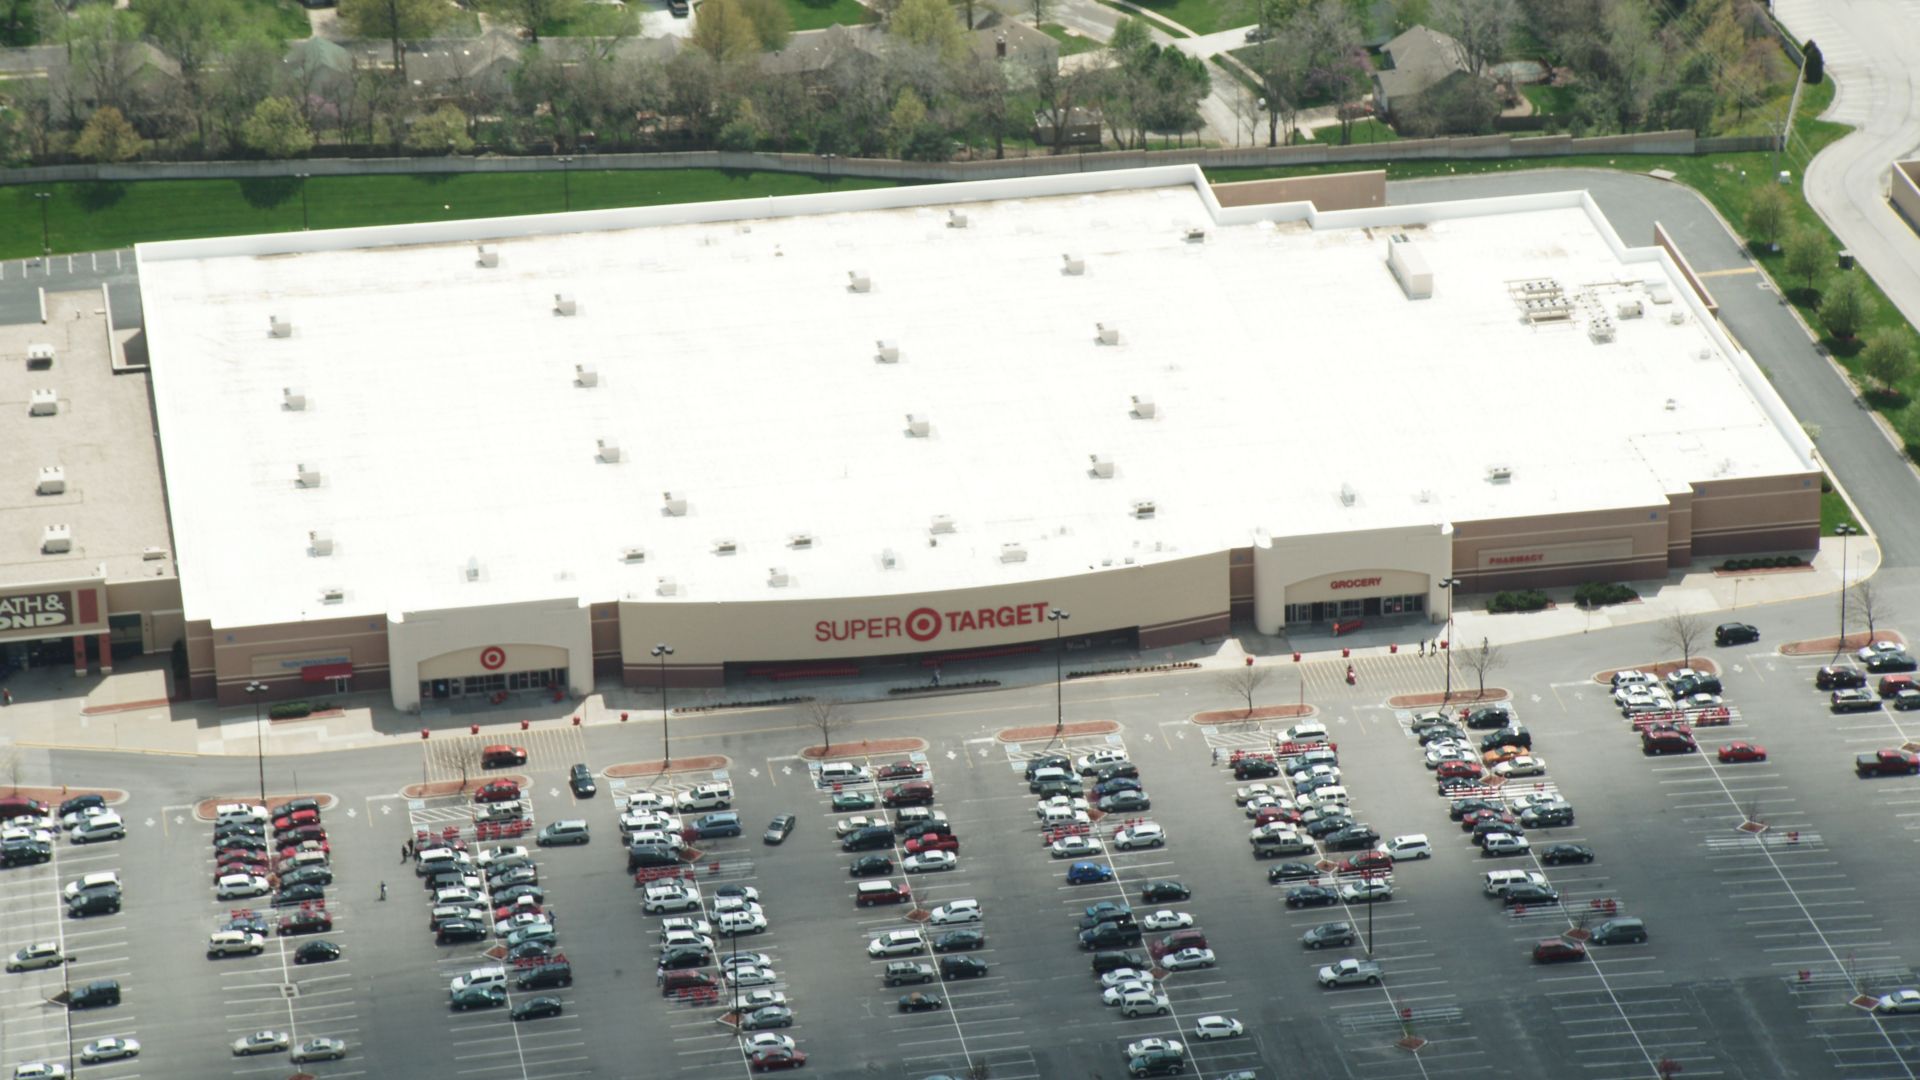 Sarnafil white membrane roof system on a Super Target building